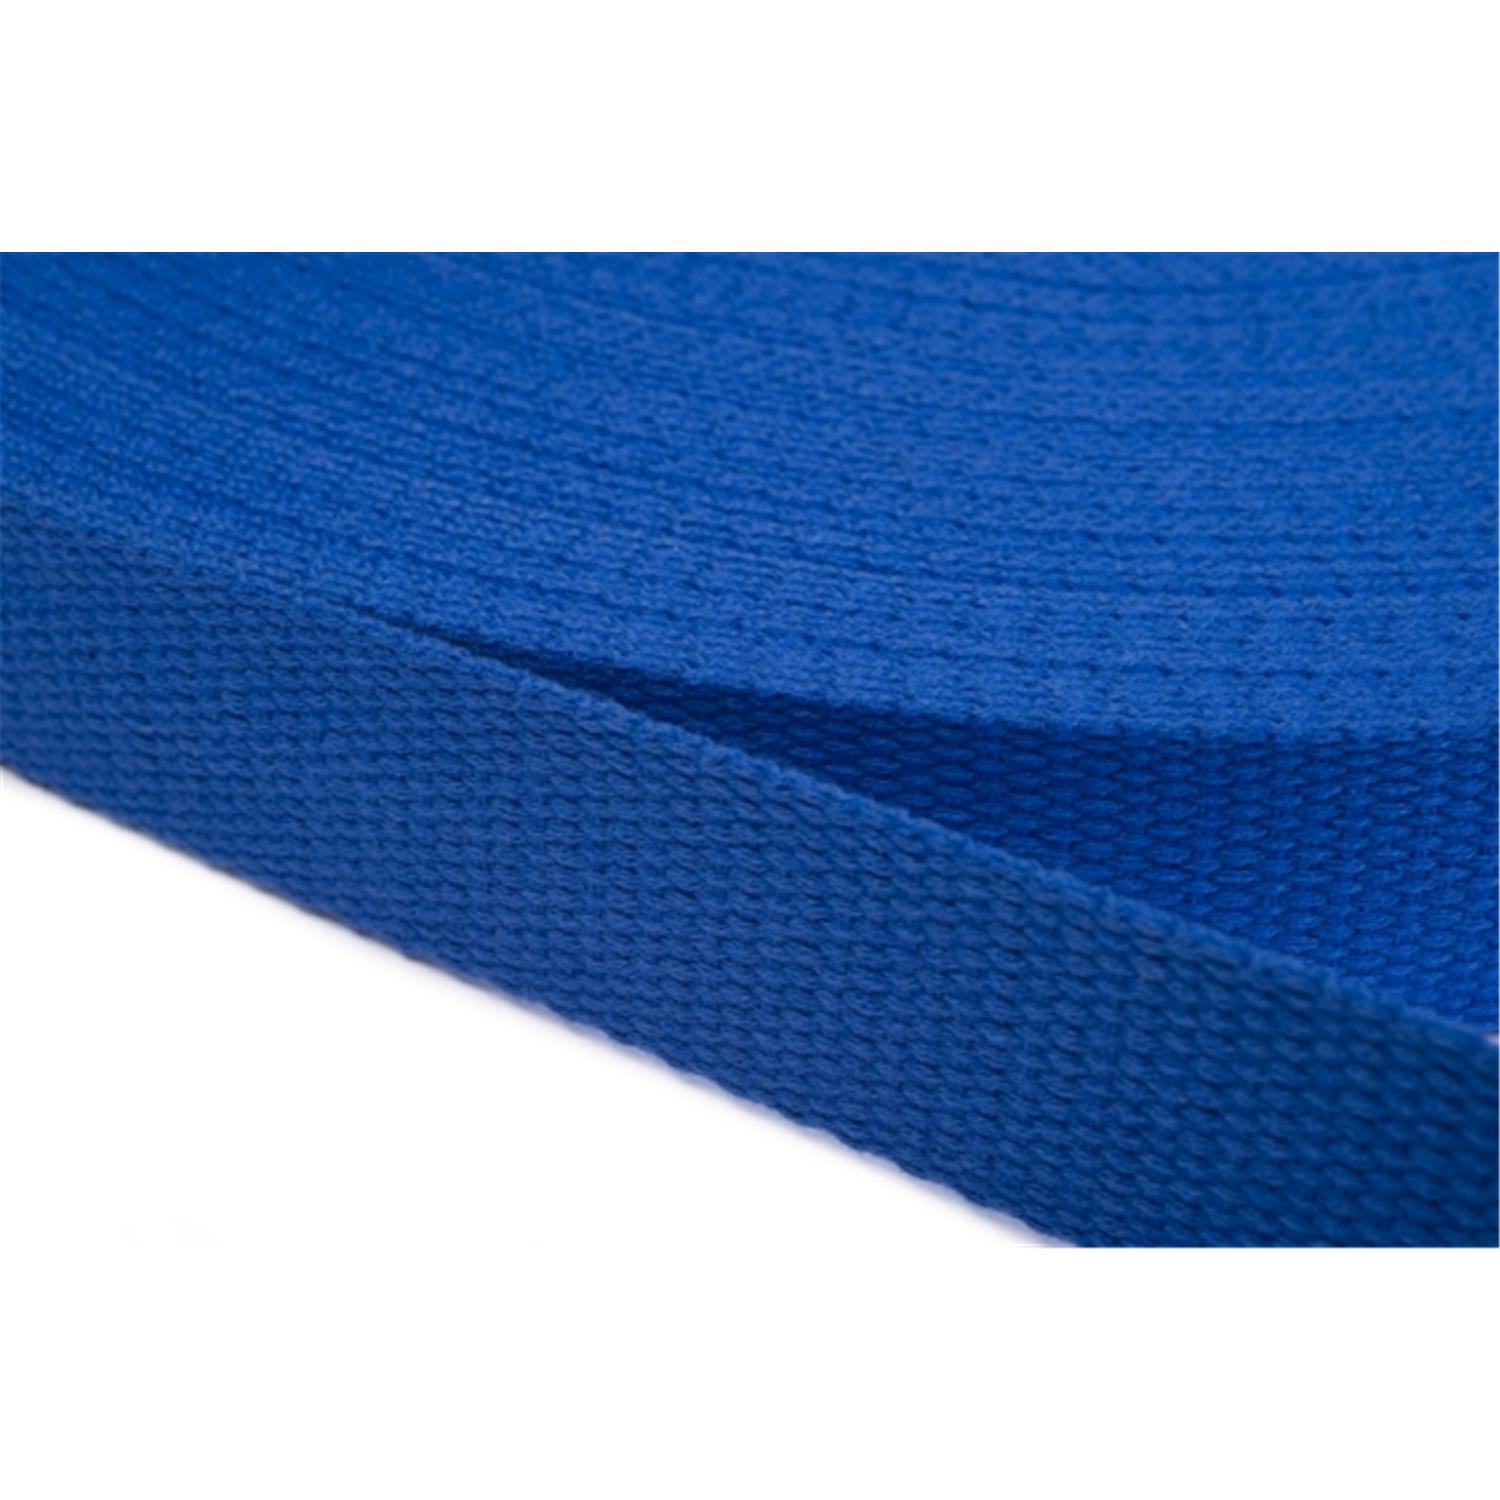 Gurtband aus Baumwolle 15mm in 20 Farben 12 - royalblau 6 Meter